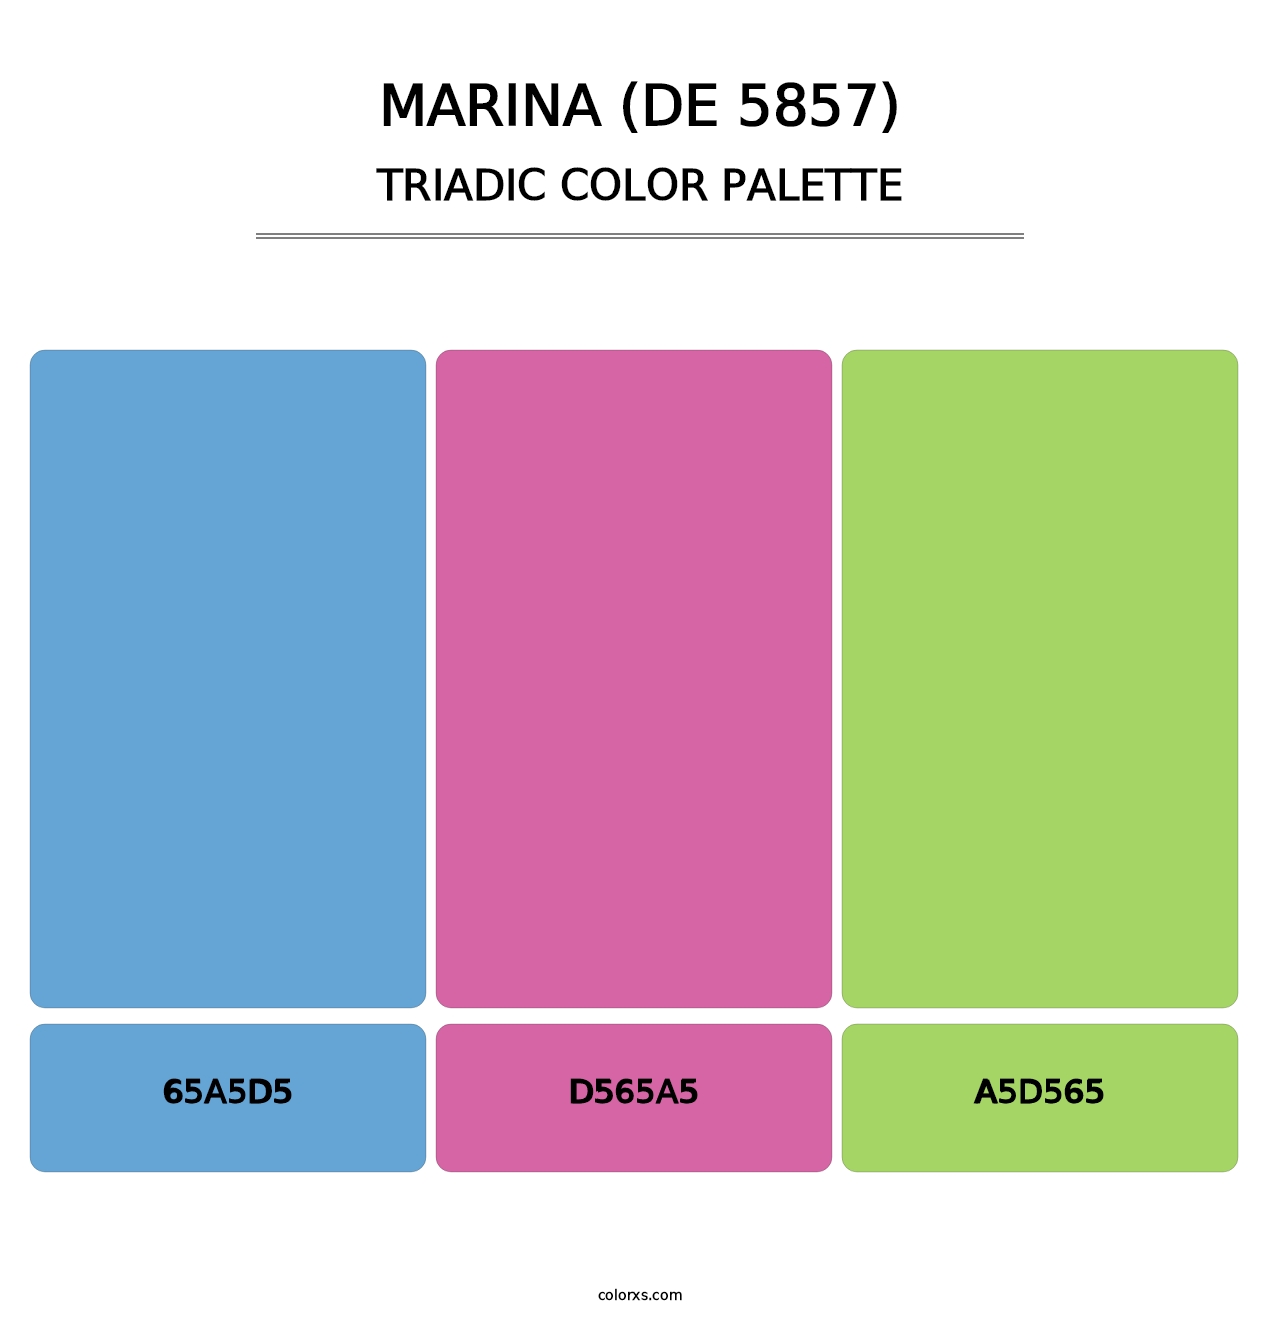 Marina (DE 5857) - Triadic Color Palette